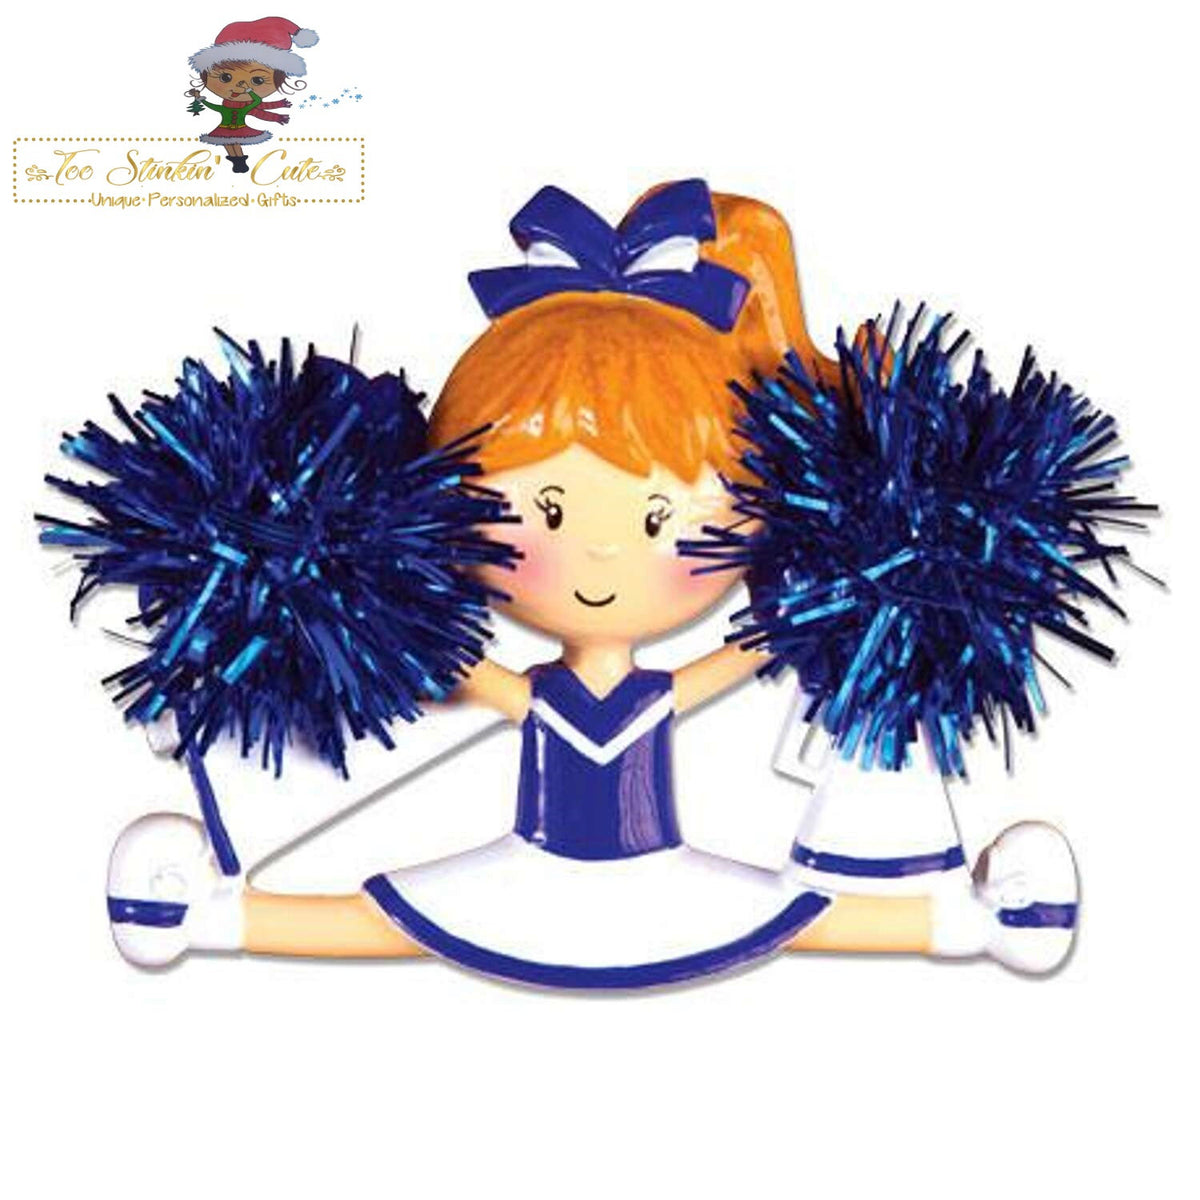 Christmas Ornament Girl Cheerleader Blue/ Cheer/ Pom Pom/ Kids/ Child/ –  Too Stinkin' Cute